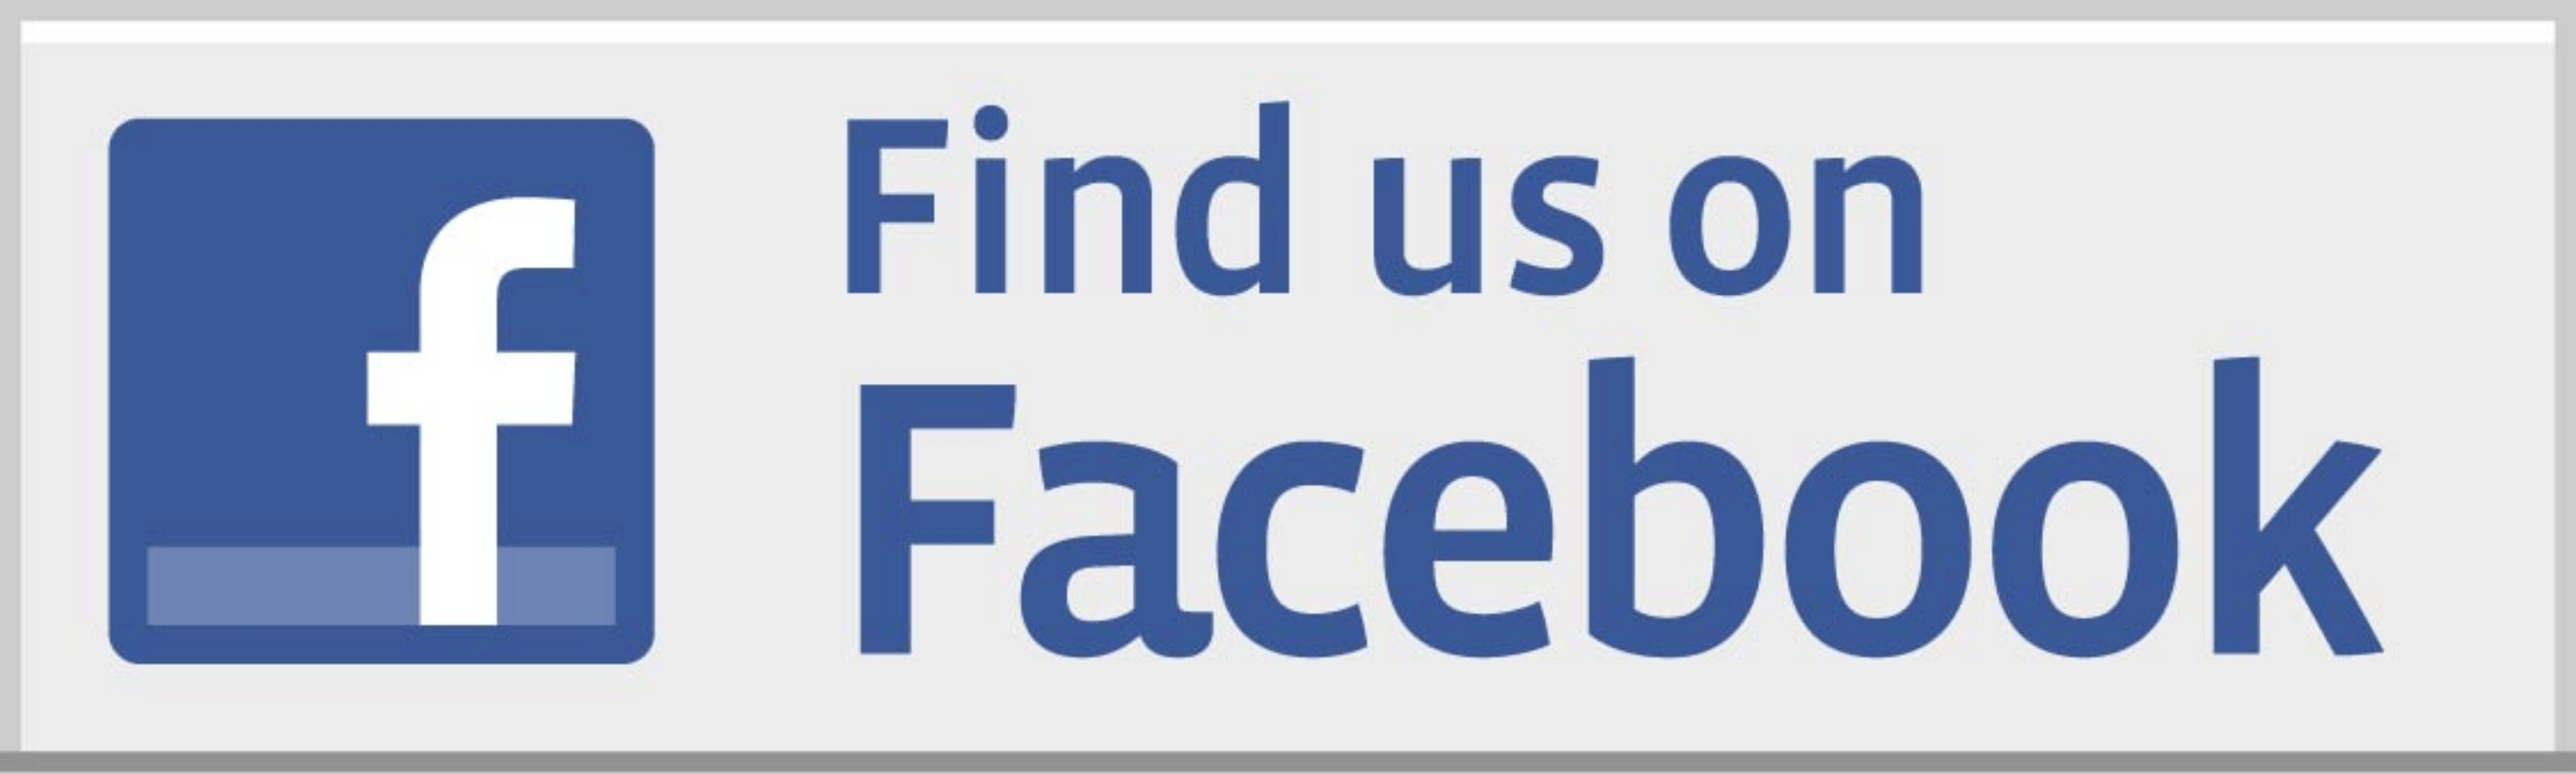 Like Us On Facebook Logo - Facebook logo clip art - RR collections